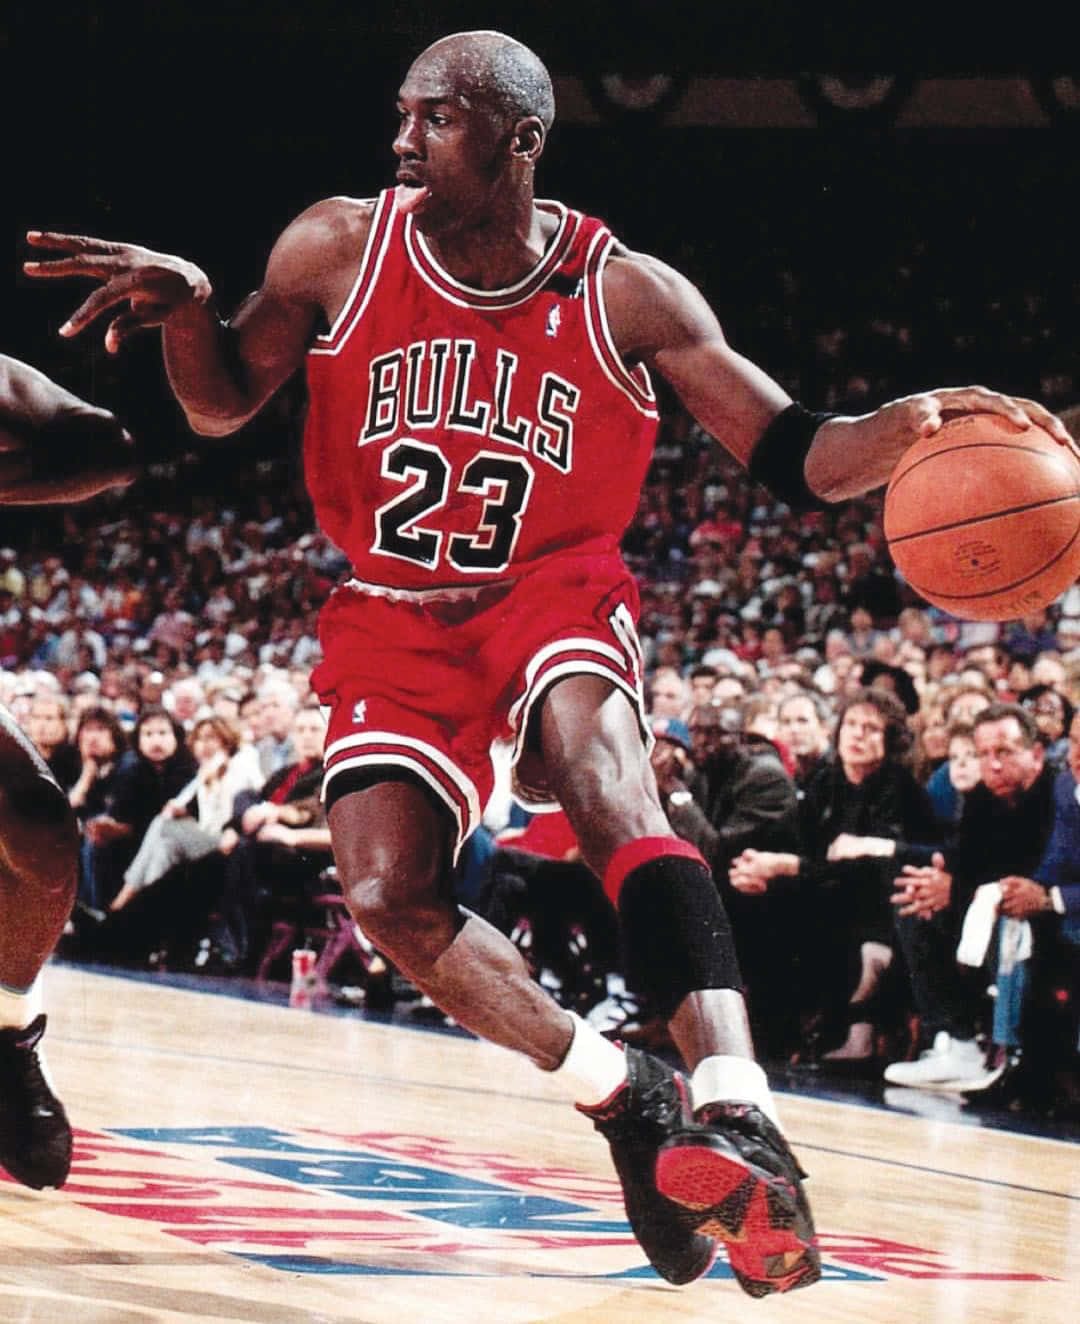 Michael Jordan, legendary NBA basketball player